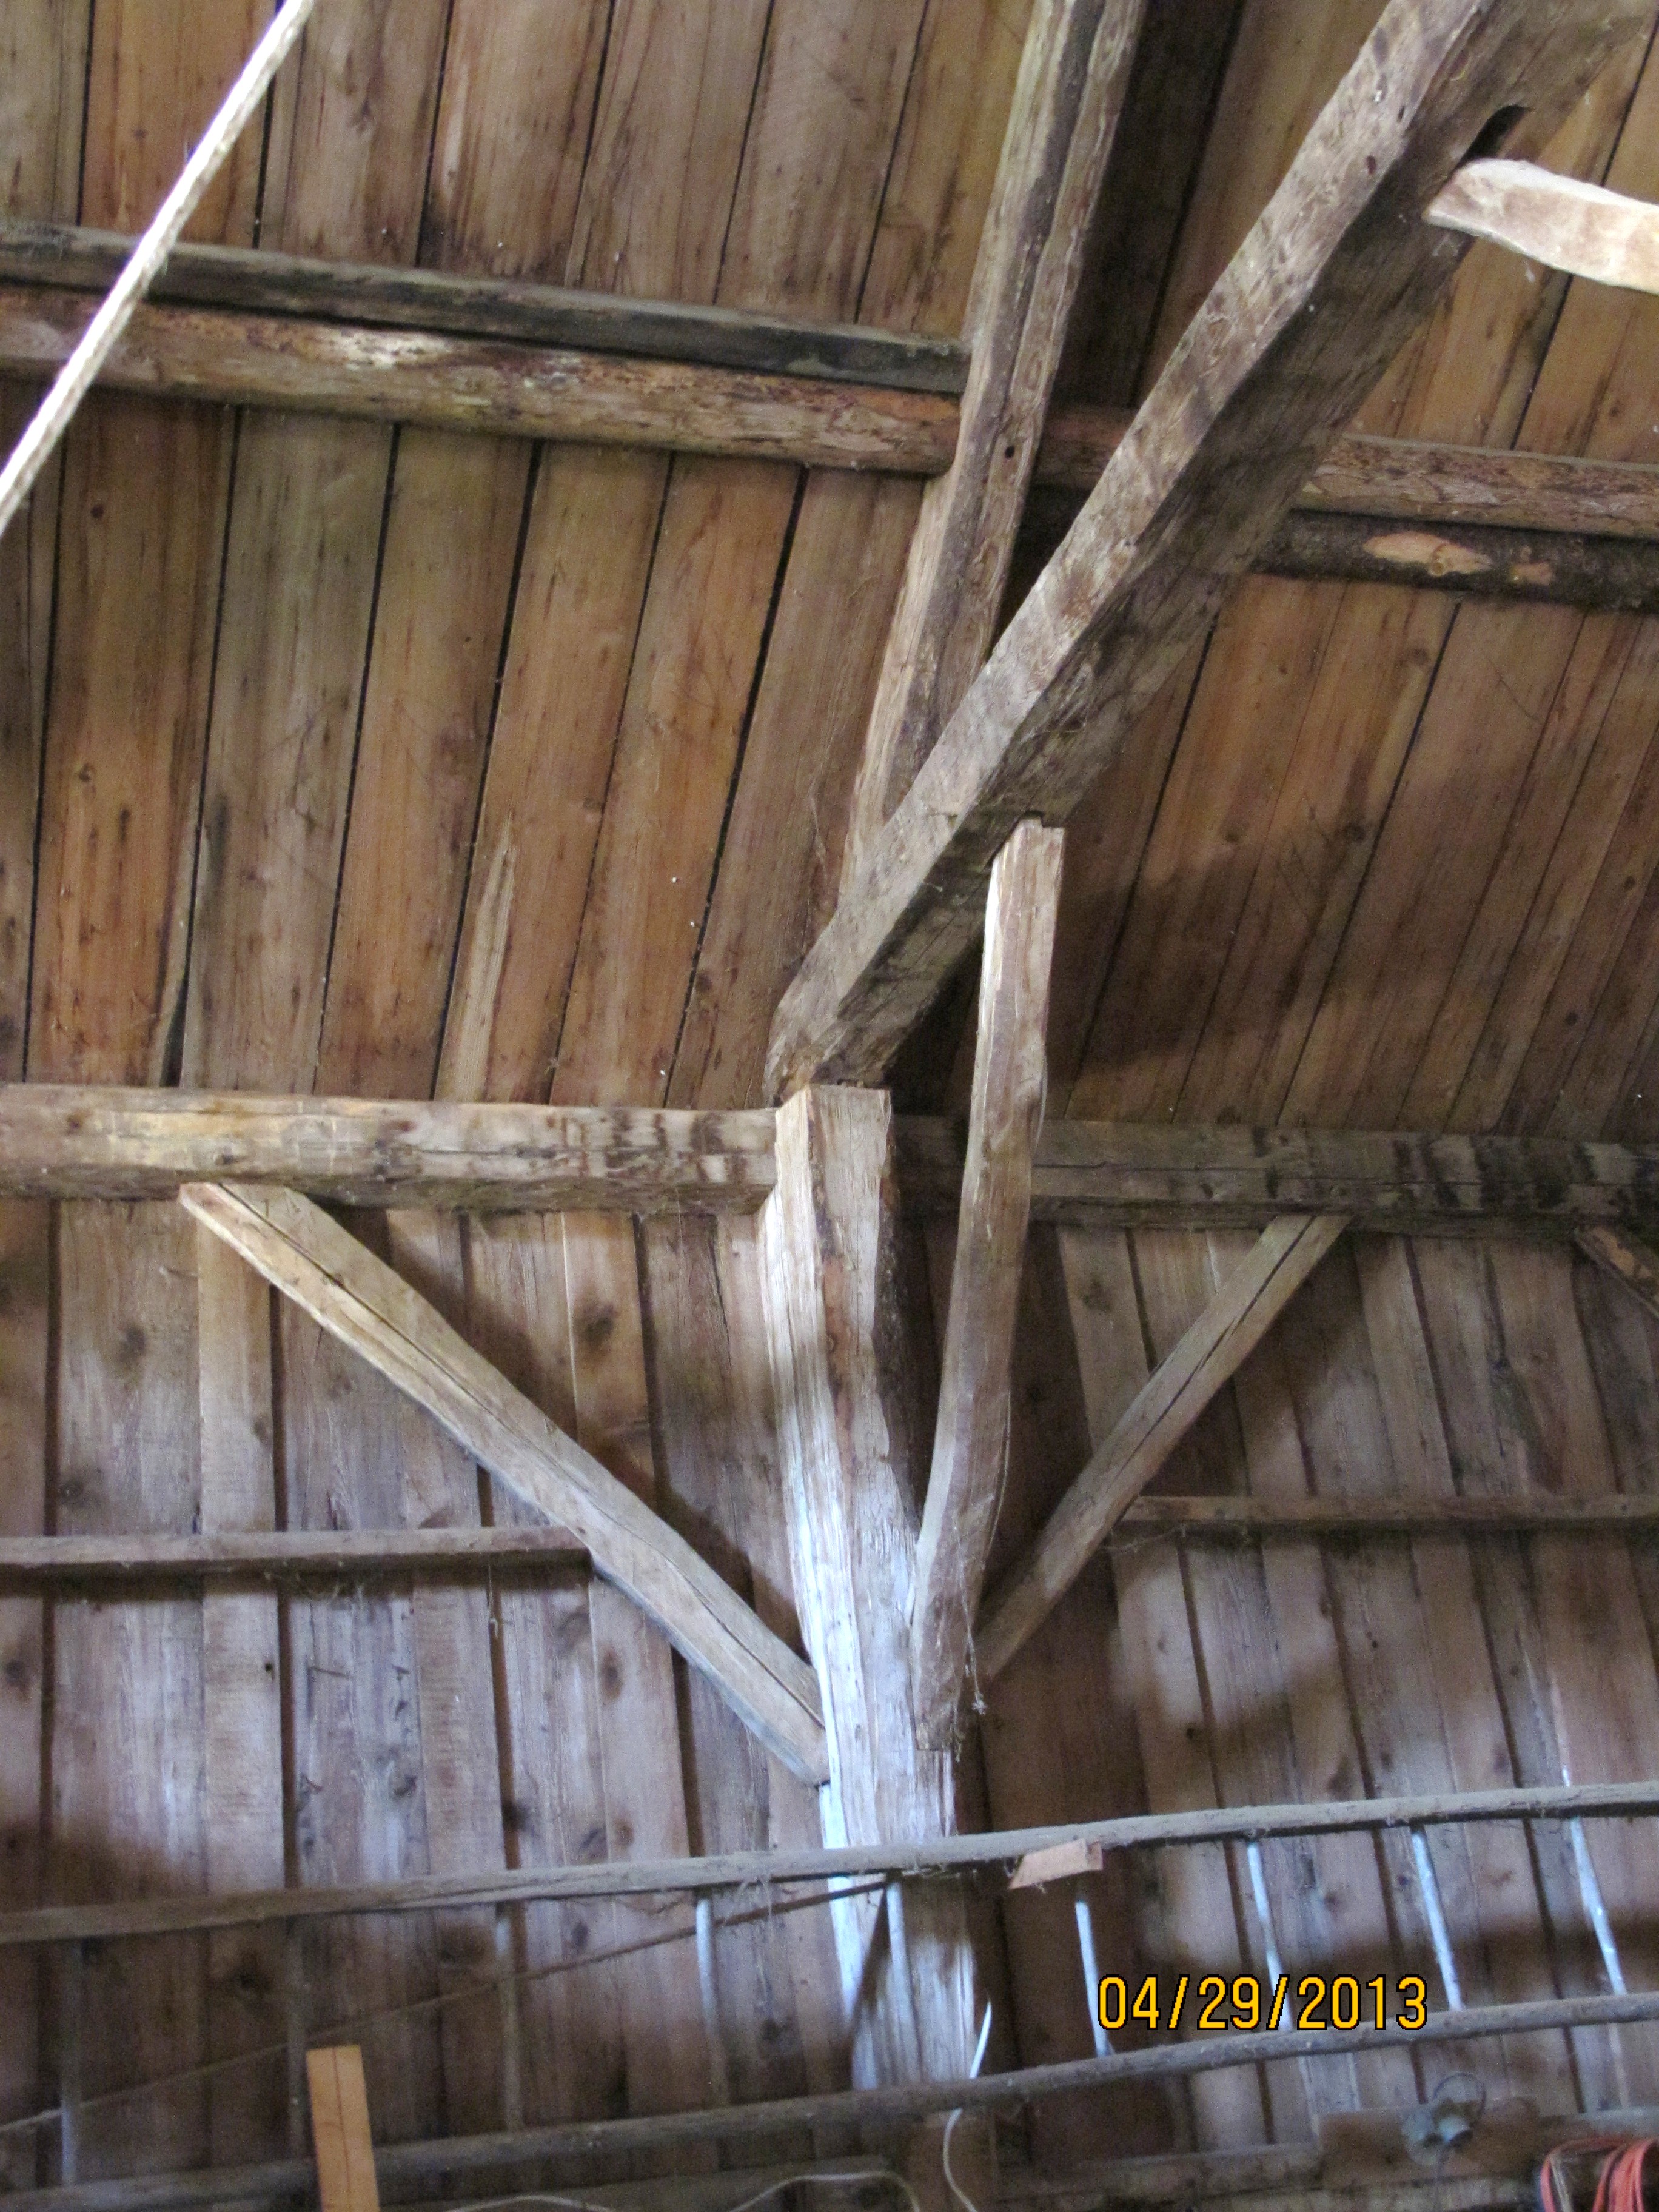 madisonbarns | A tour of 100 year old barns in Madison, NH diagrams old barns 